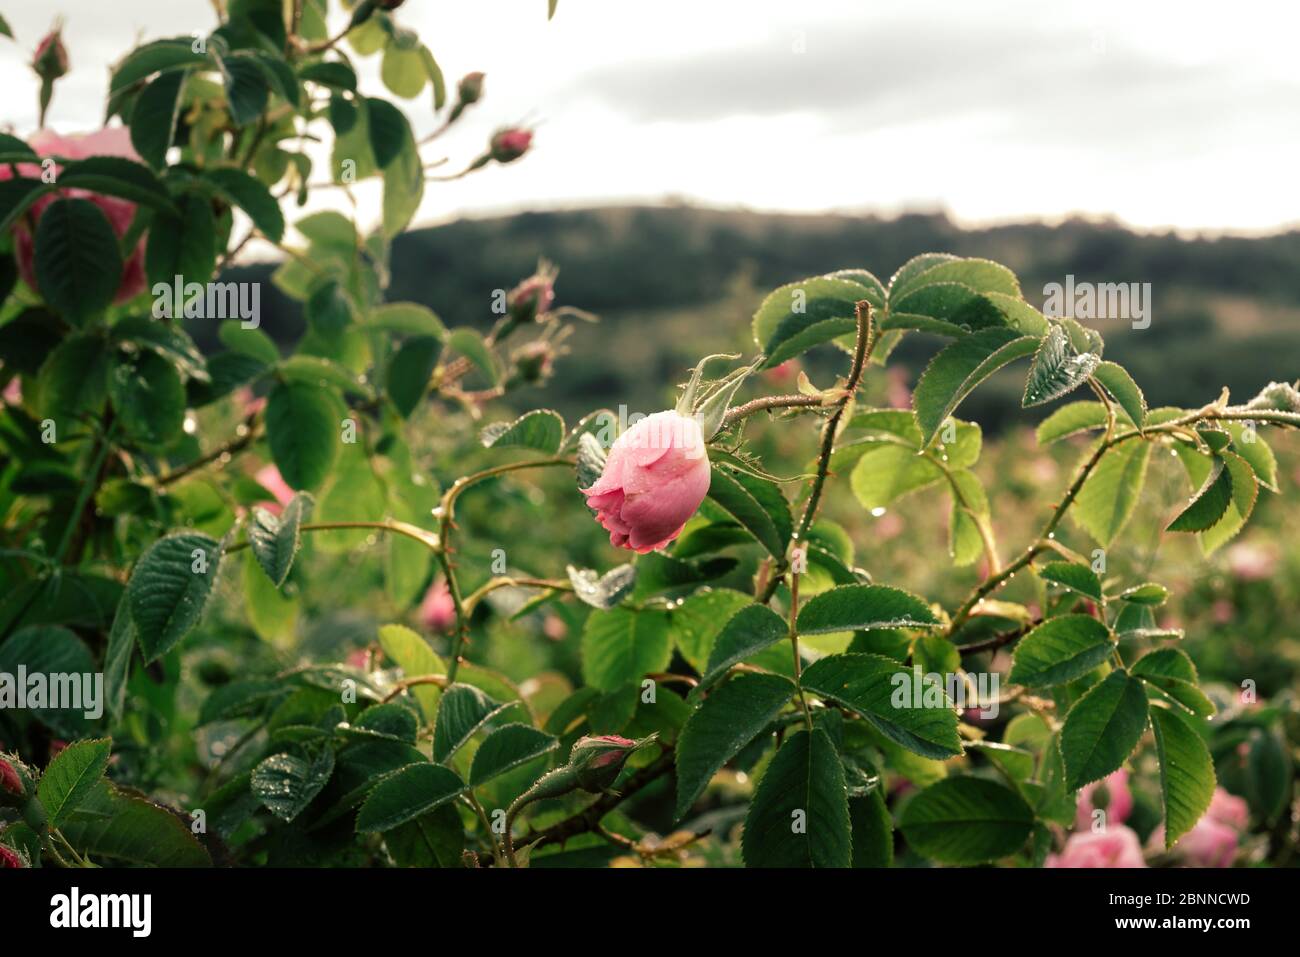 Rose field bushes Stock Photo